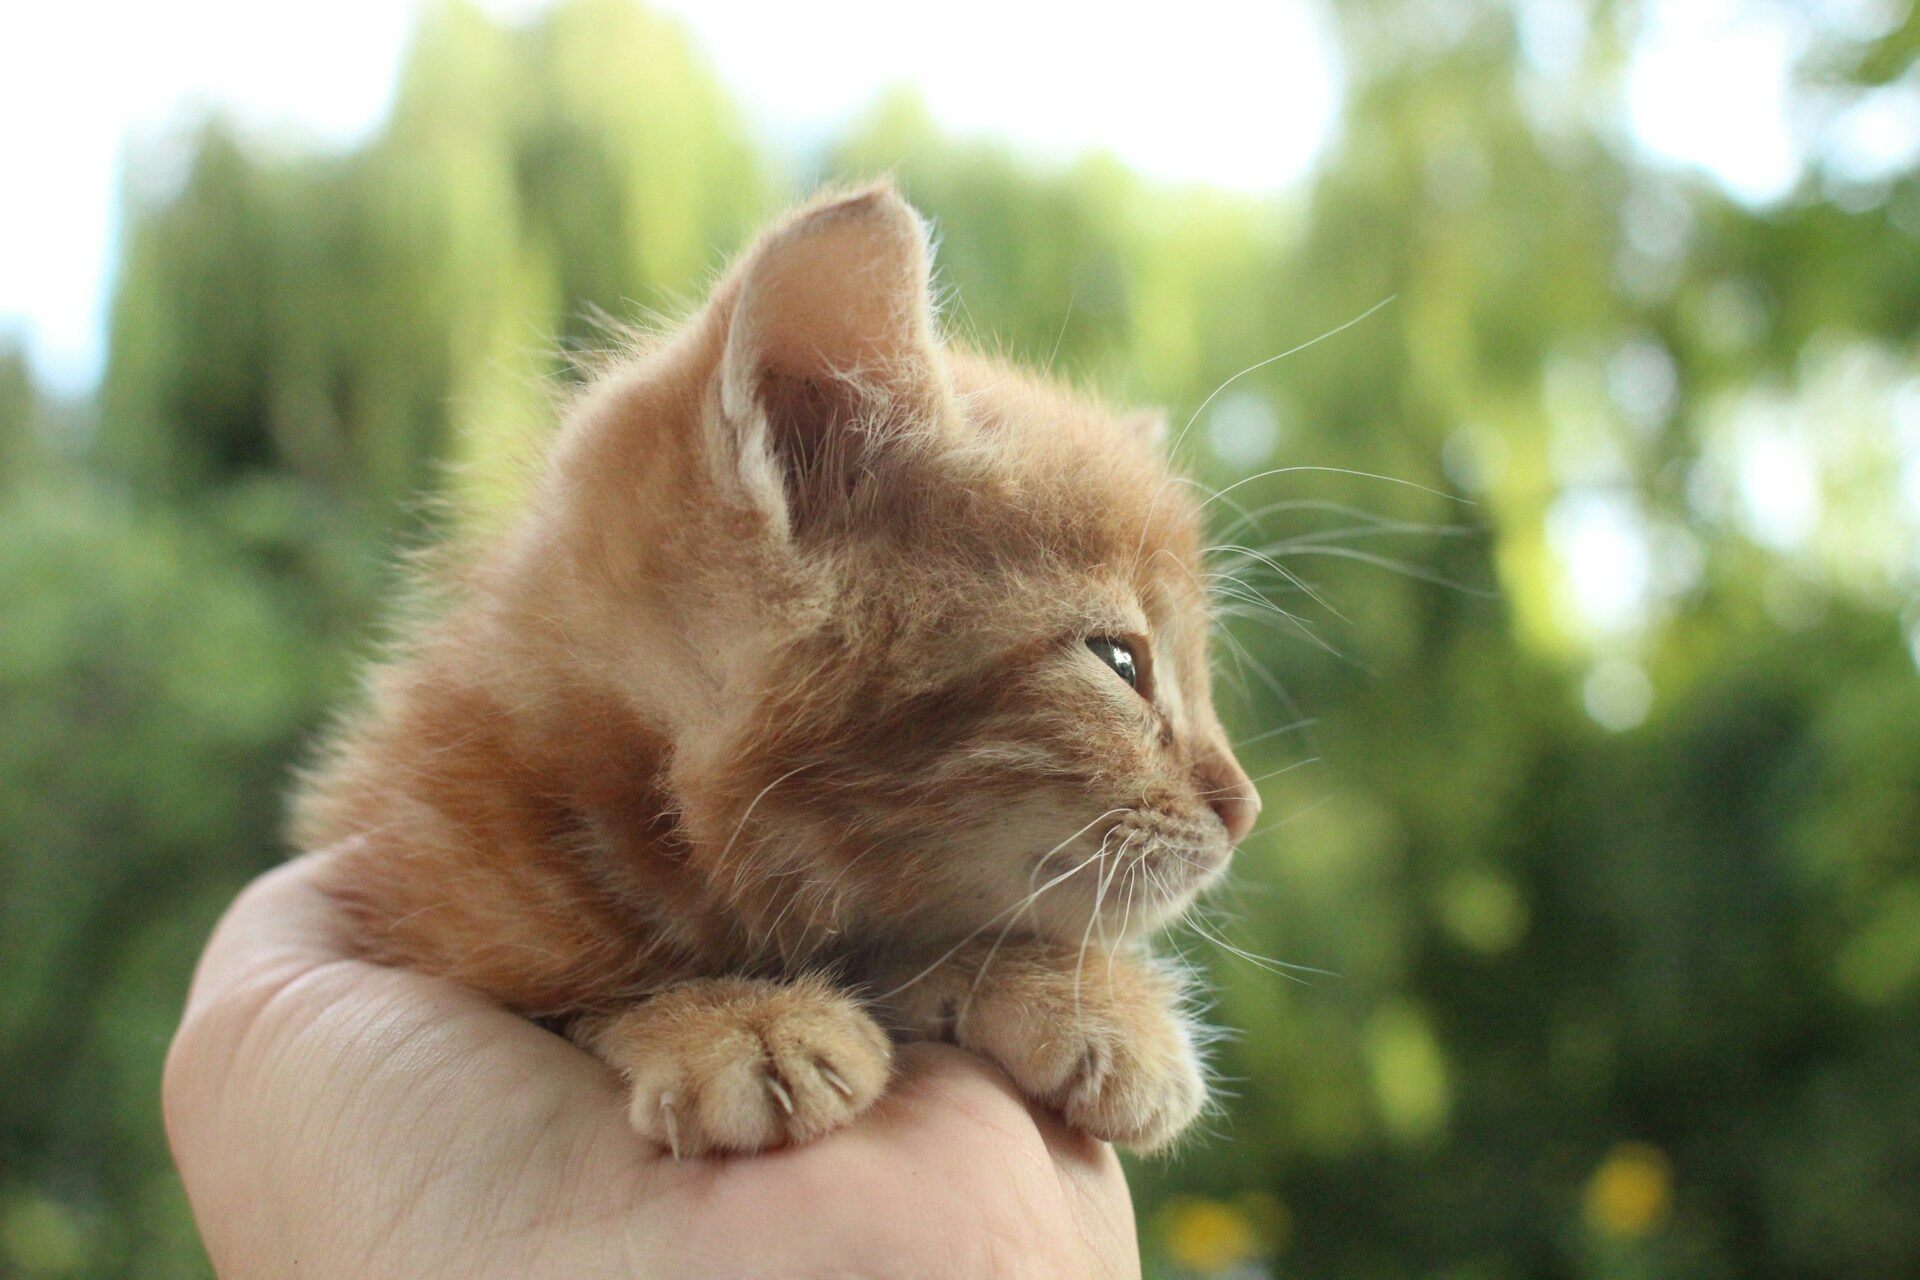 A small brown kitten in a sunny garden